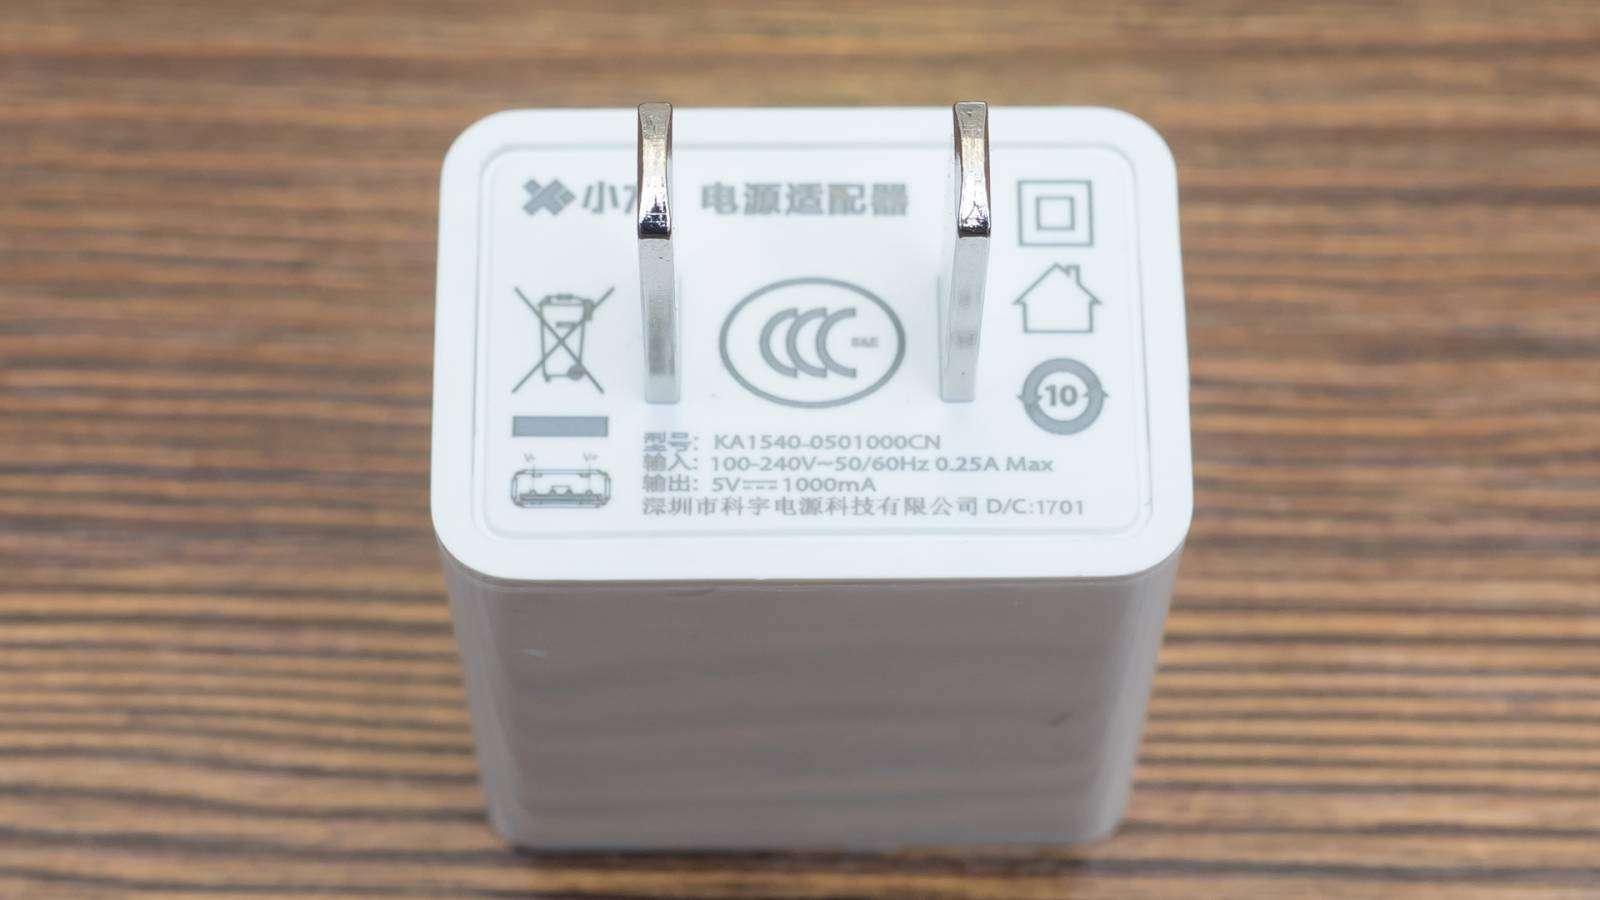 GearBest: Xiaomi Little Square Smart 1080P WiFi IP Camera - обзор, настройка, сценарии